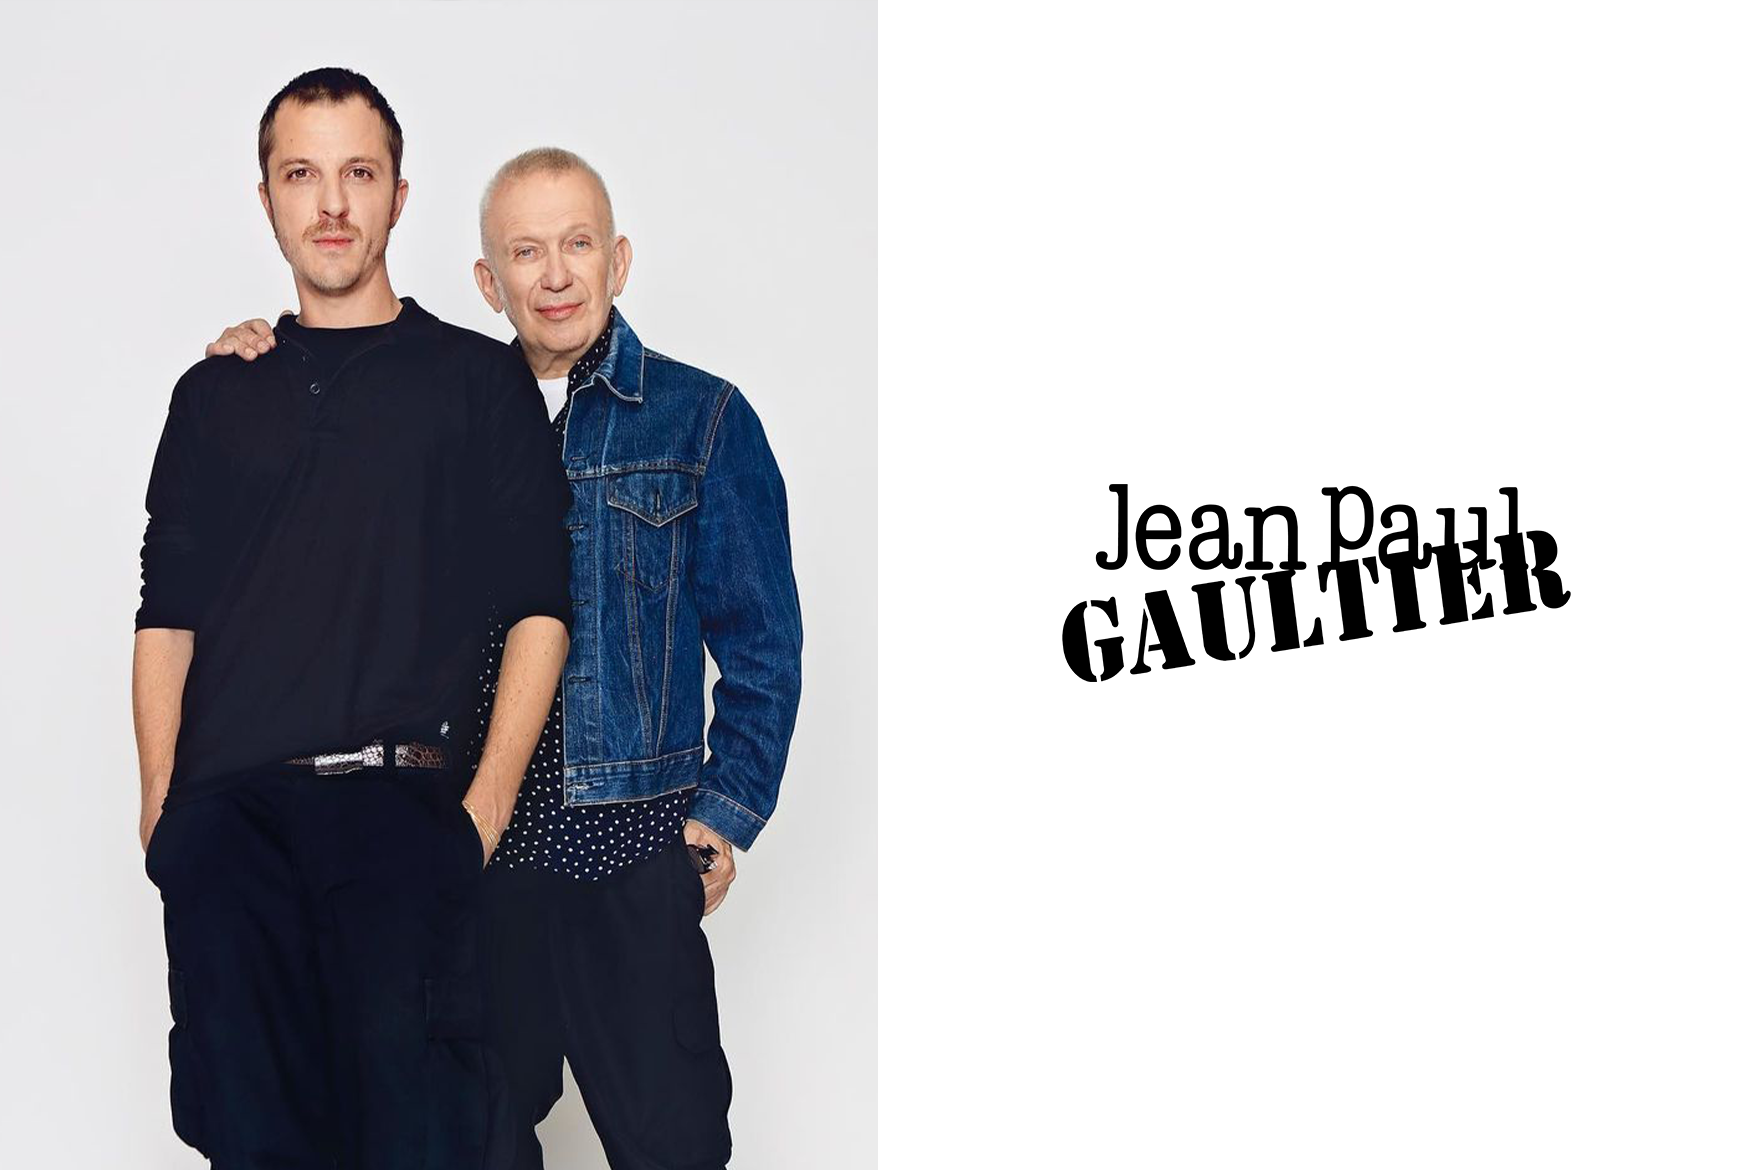 Jean-Paul-Gaultier-next-haute-couture-designer-is-Glenn-Martens-01